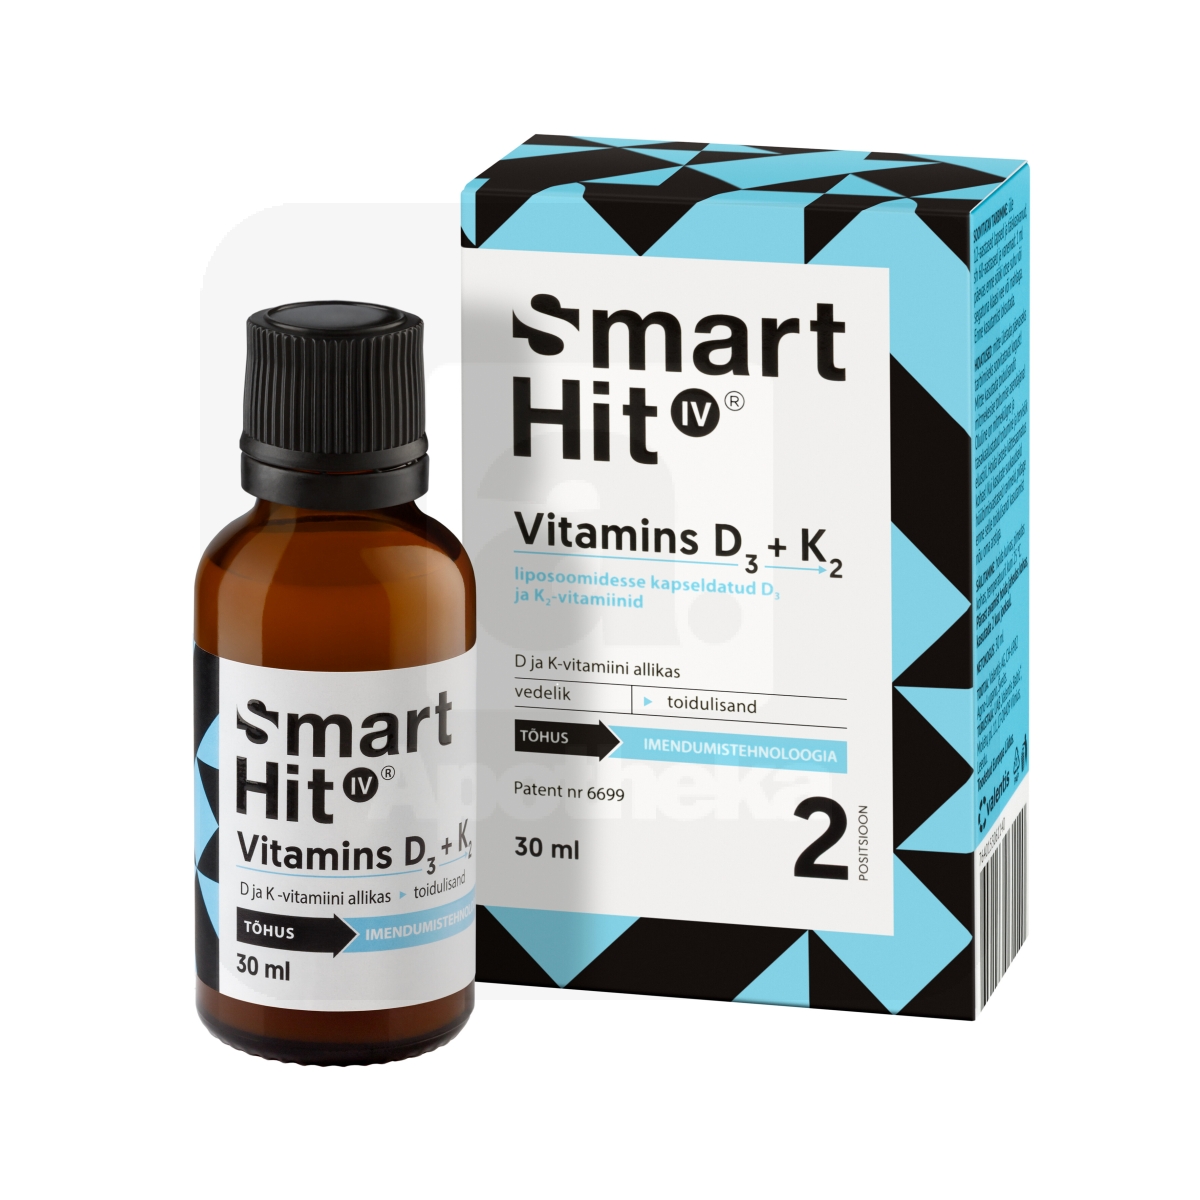 SMARTHIT IV VITAMINS D3+K2 30ML